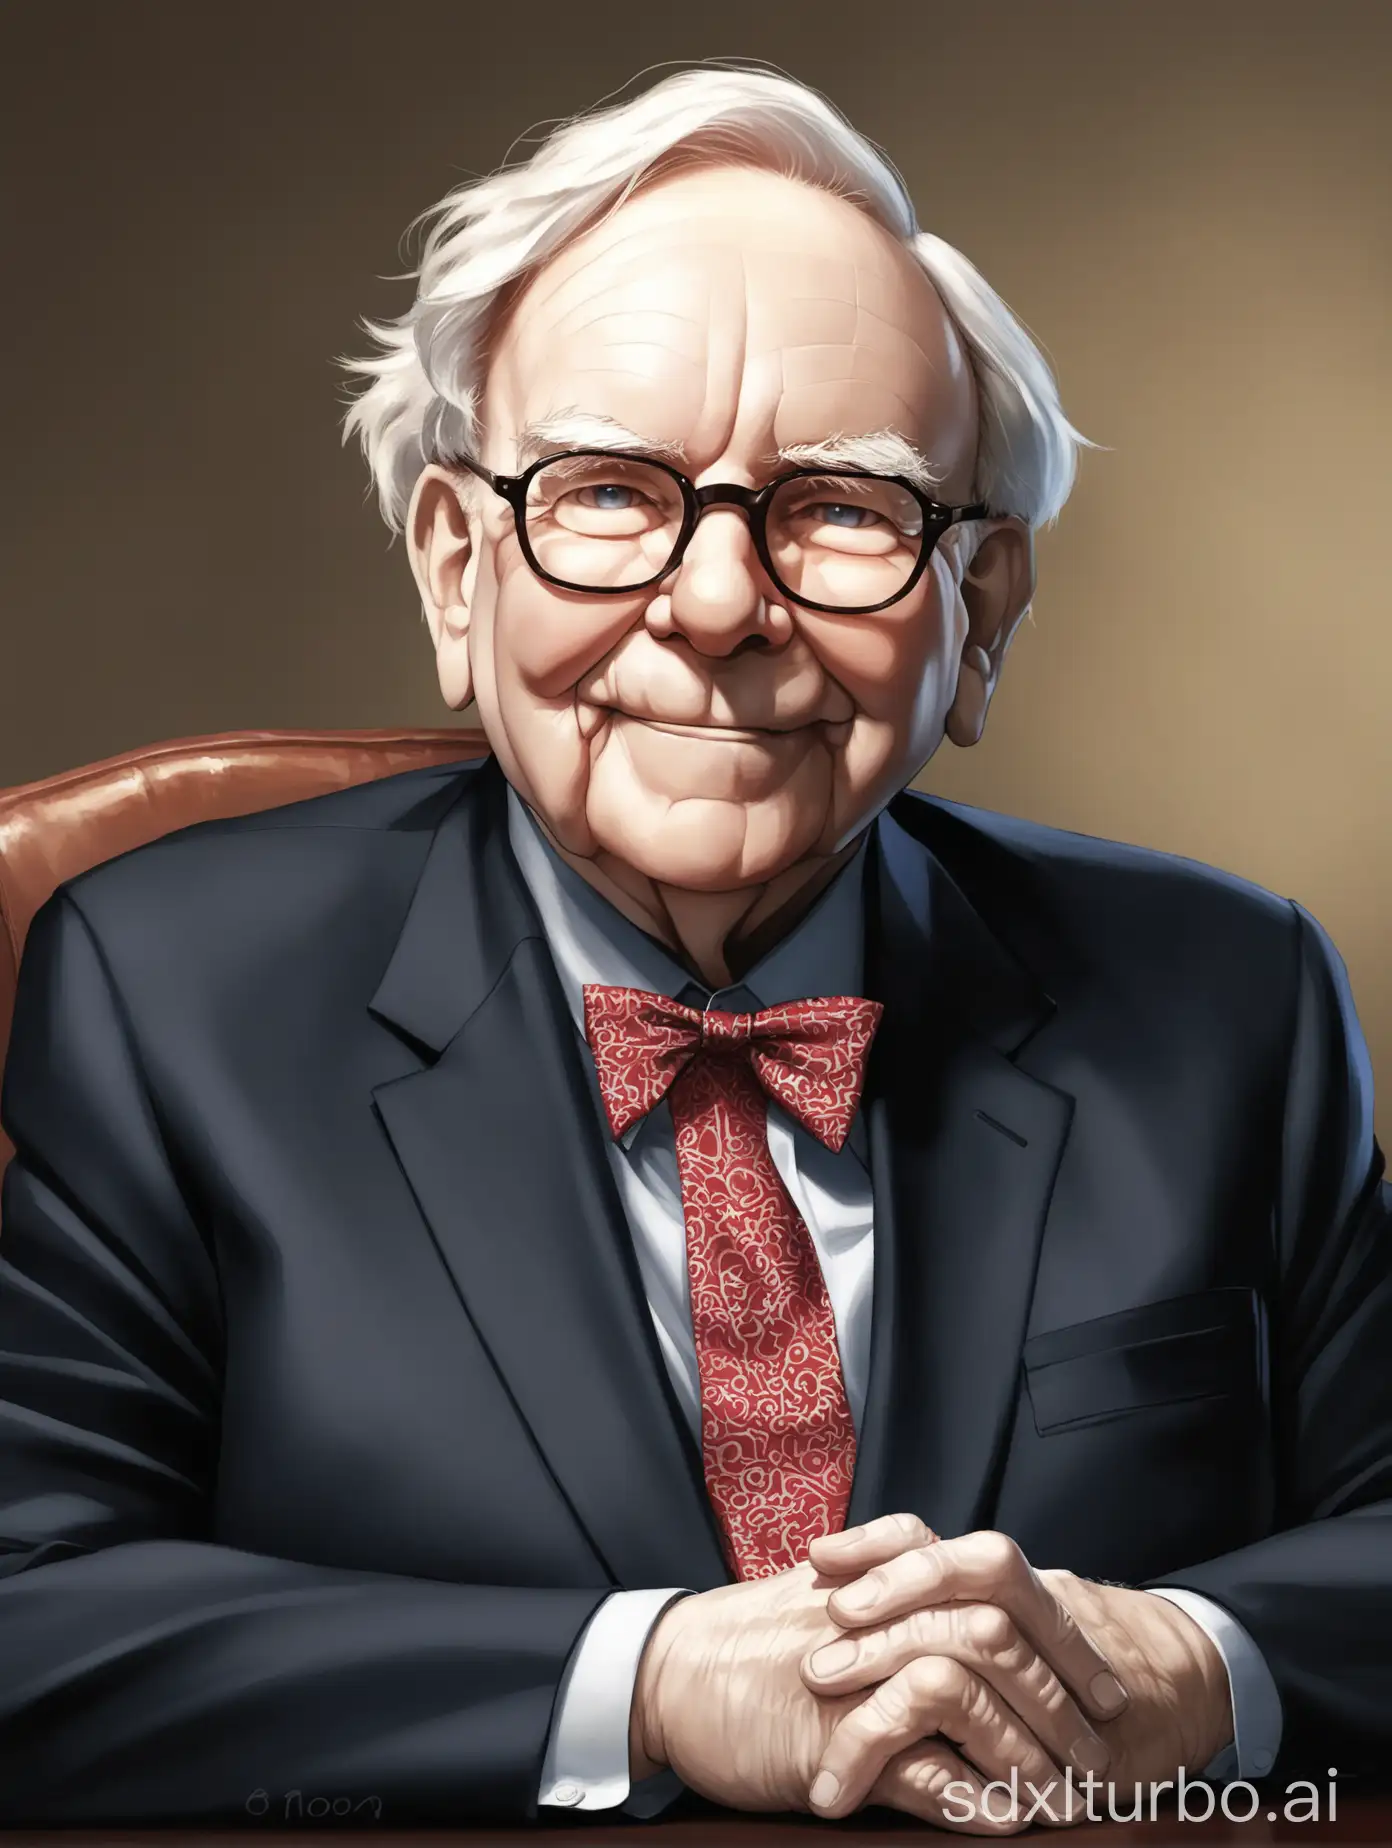 Warren-Buffett-Portrait-Iconic-Investor-and-Philanthropist-in-Thoughtful-Contemplation